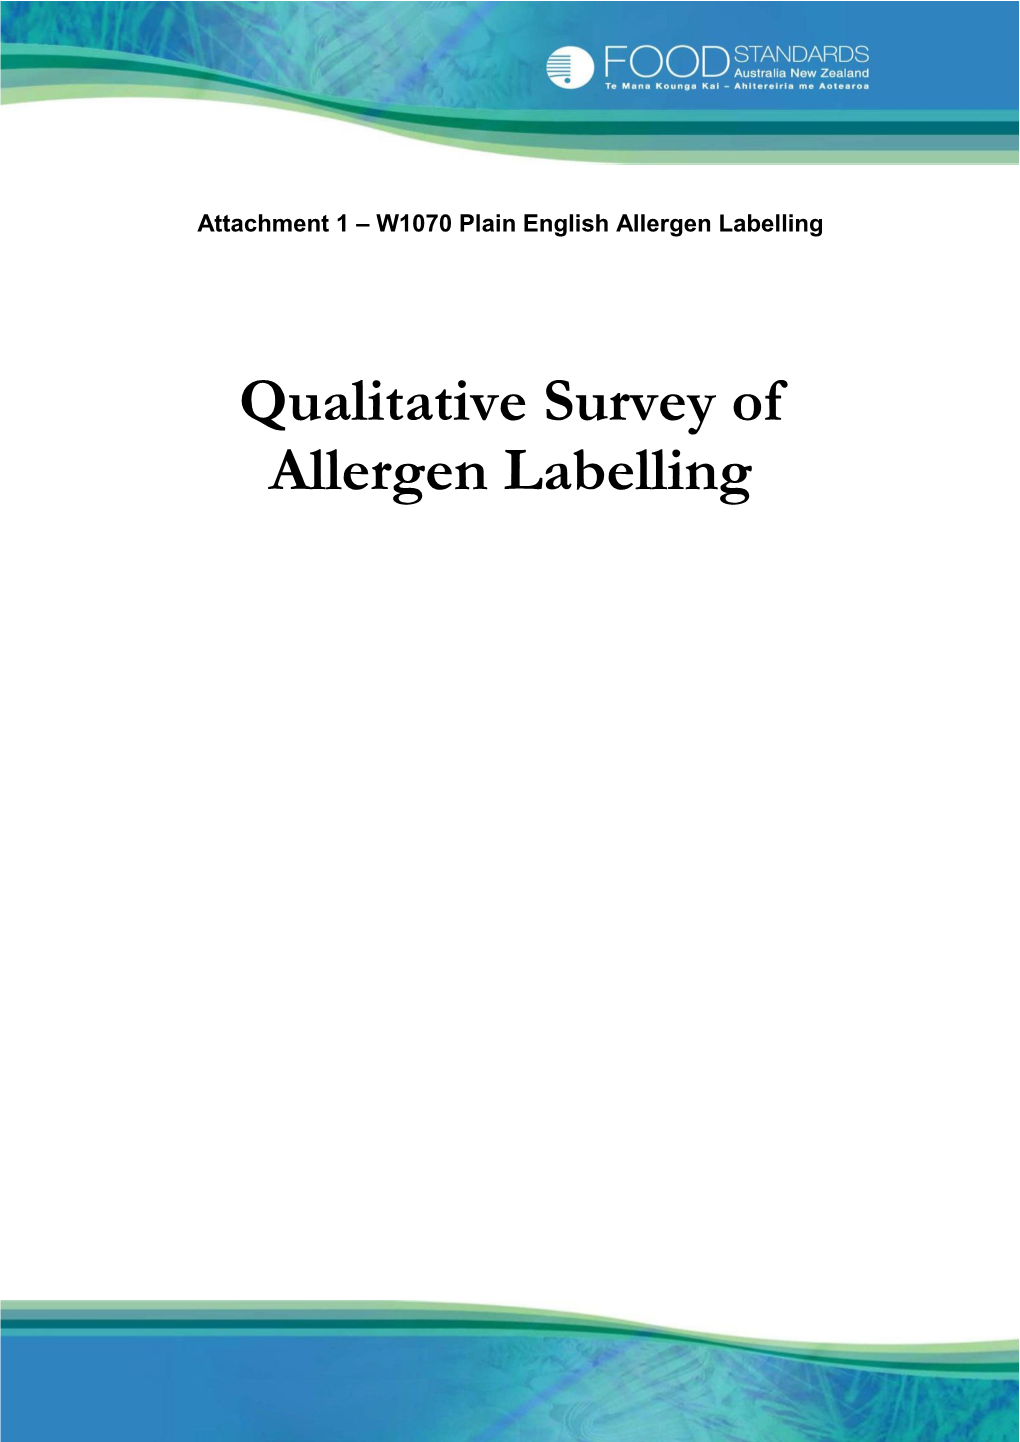 Qualitative Survey of Allergen Labelling